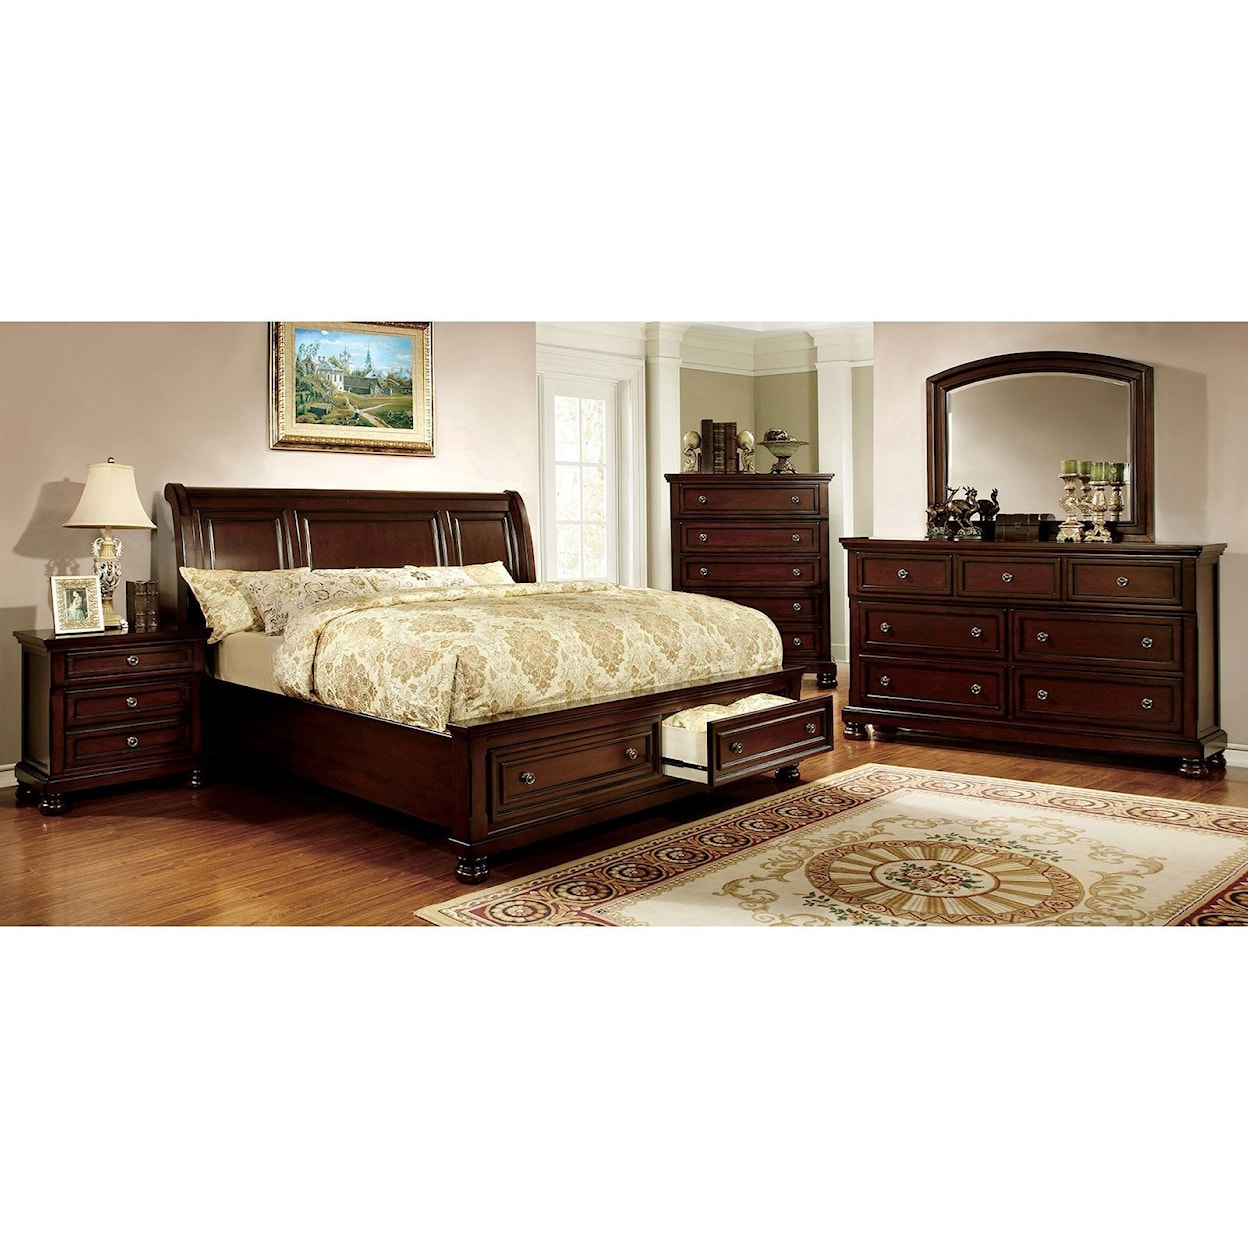 Furniture of America Northville California King Bedroom Group